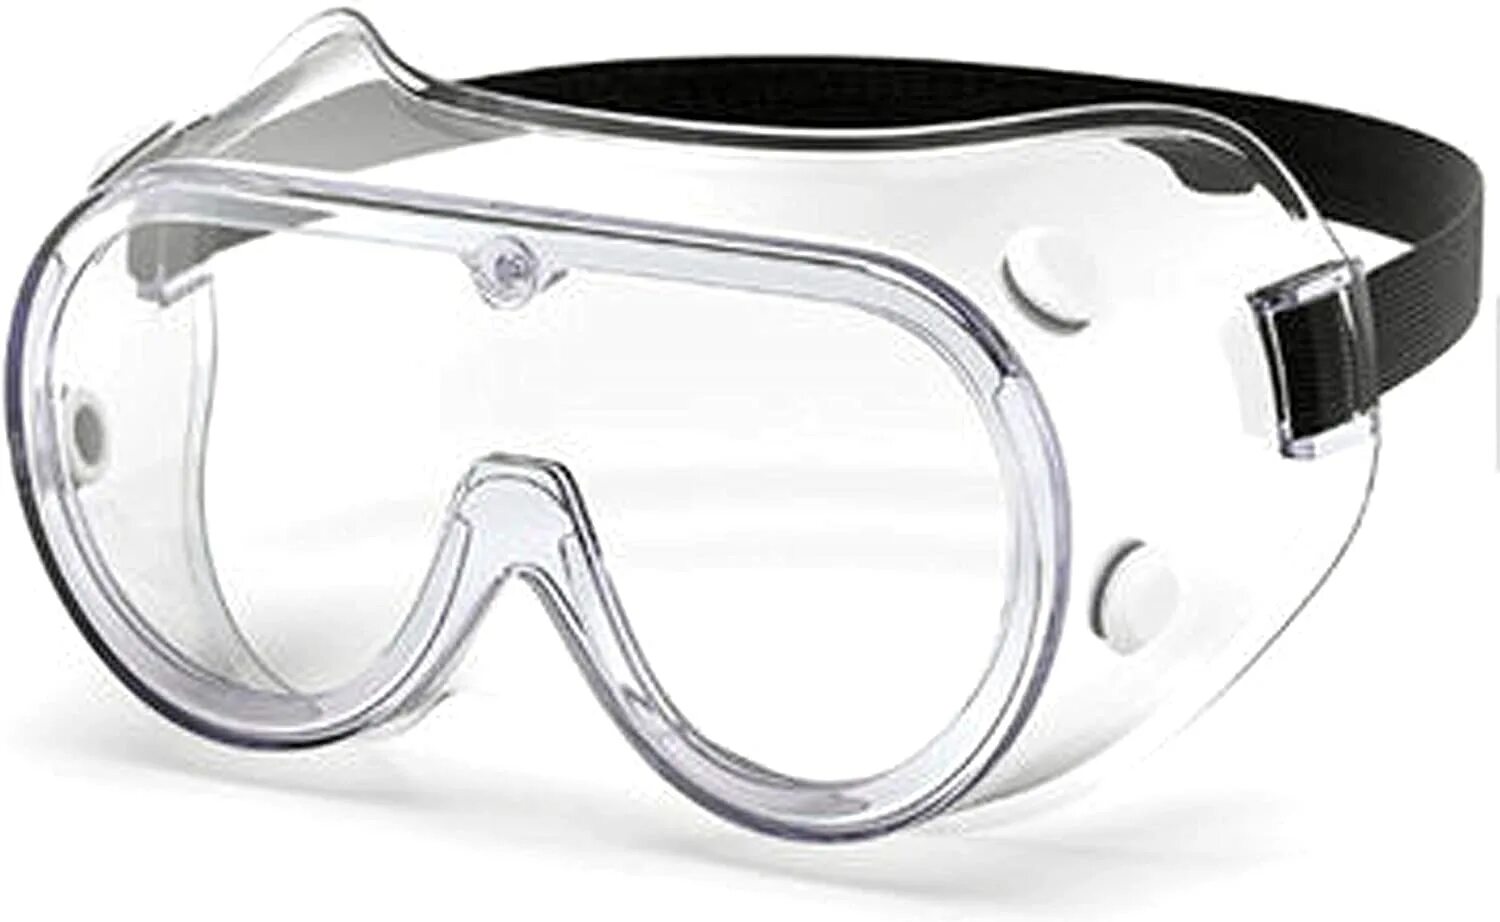 4500rpm Wear Eye Protection.